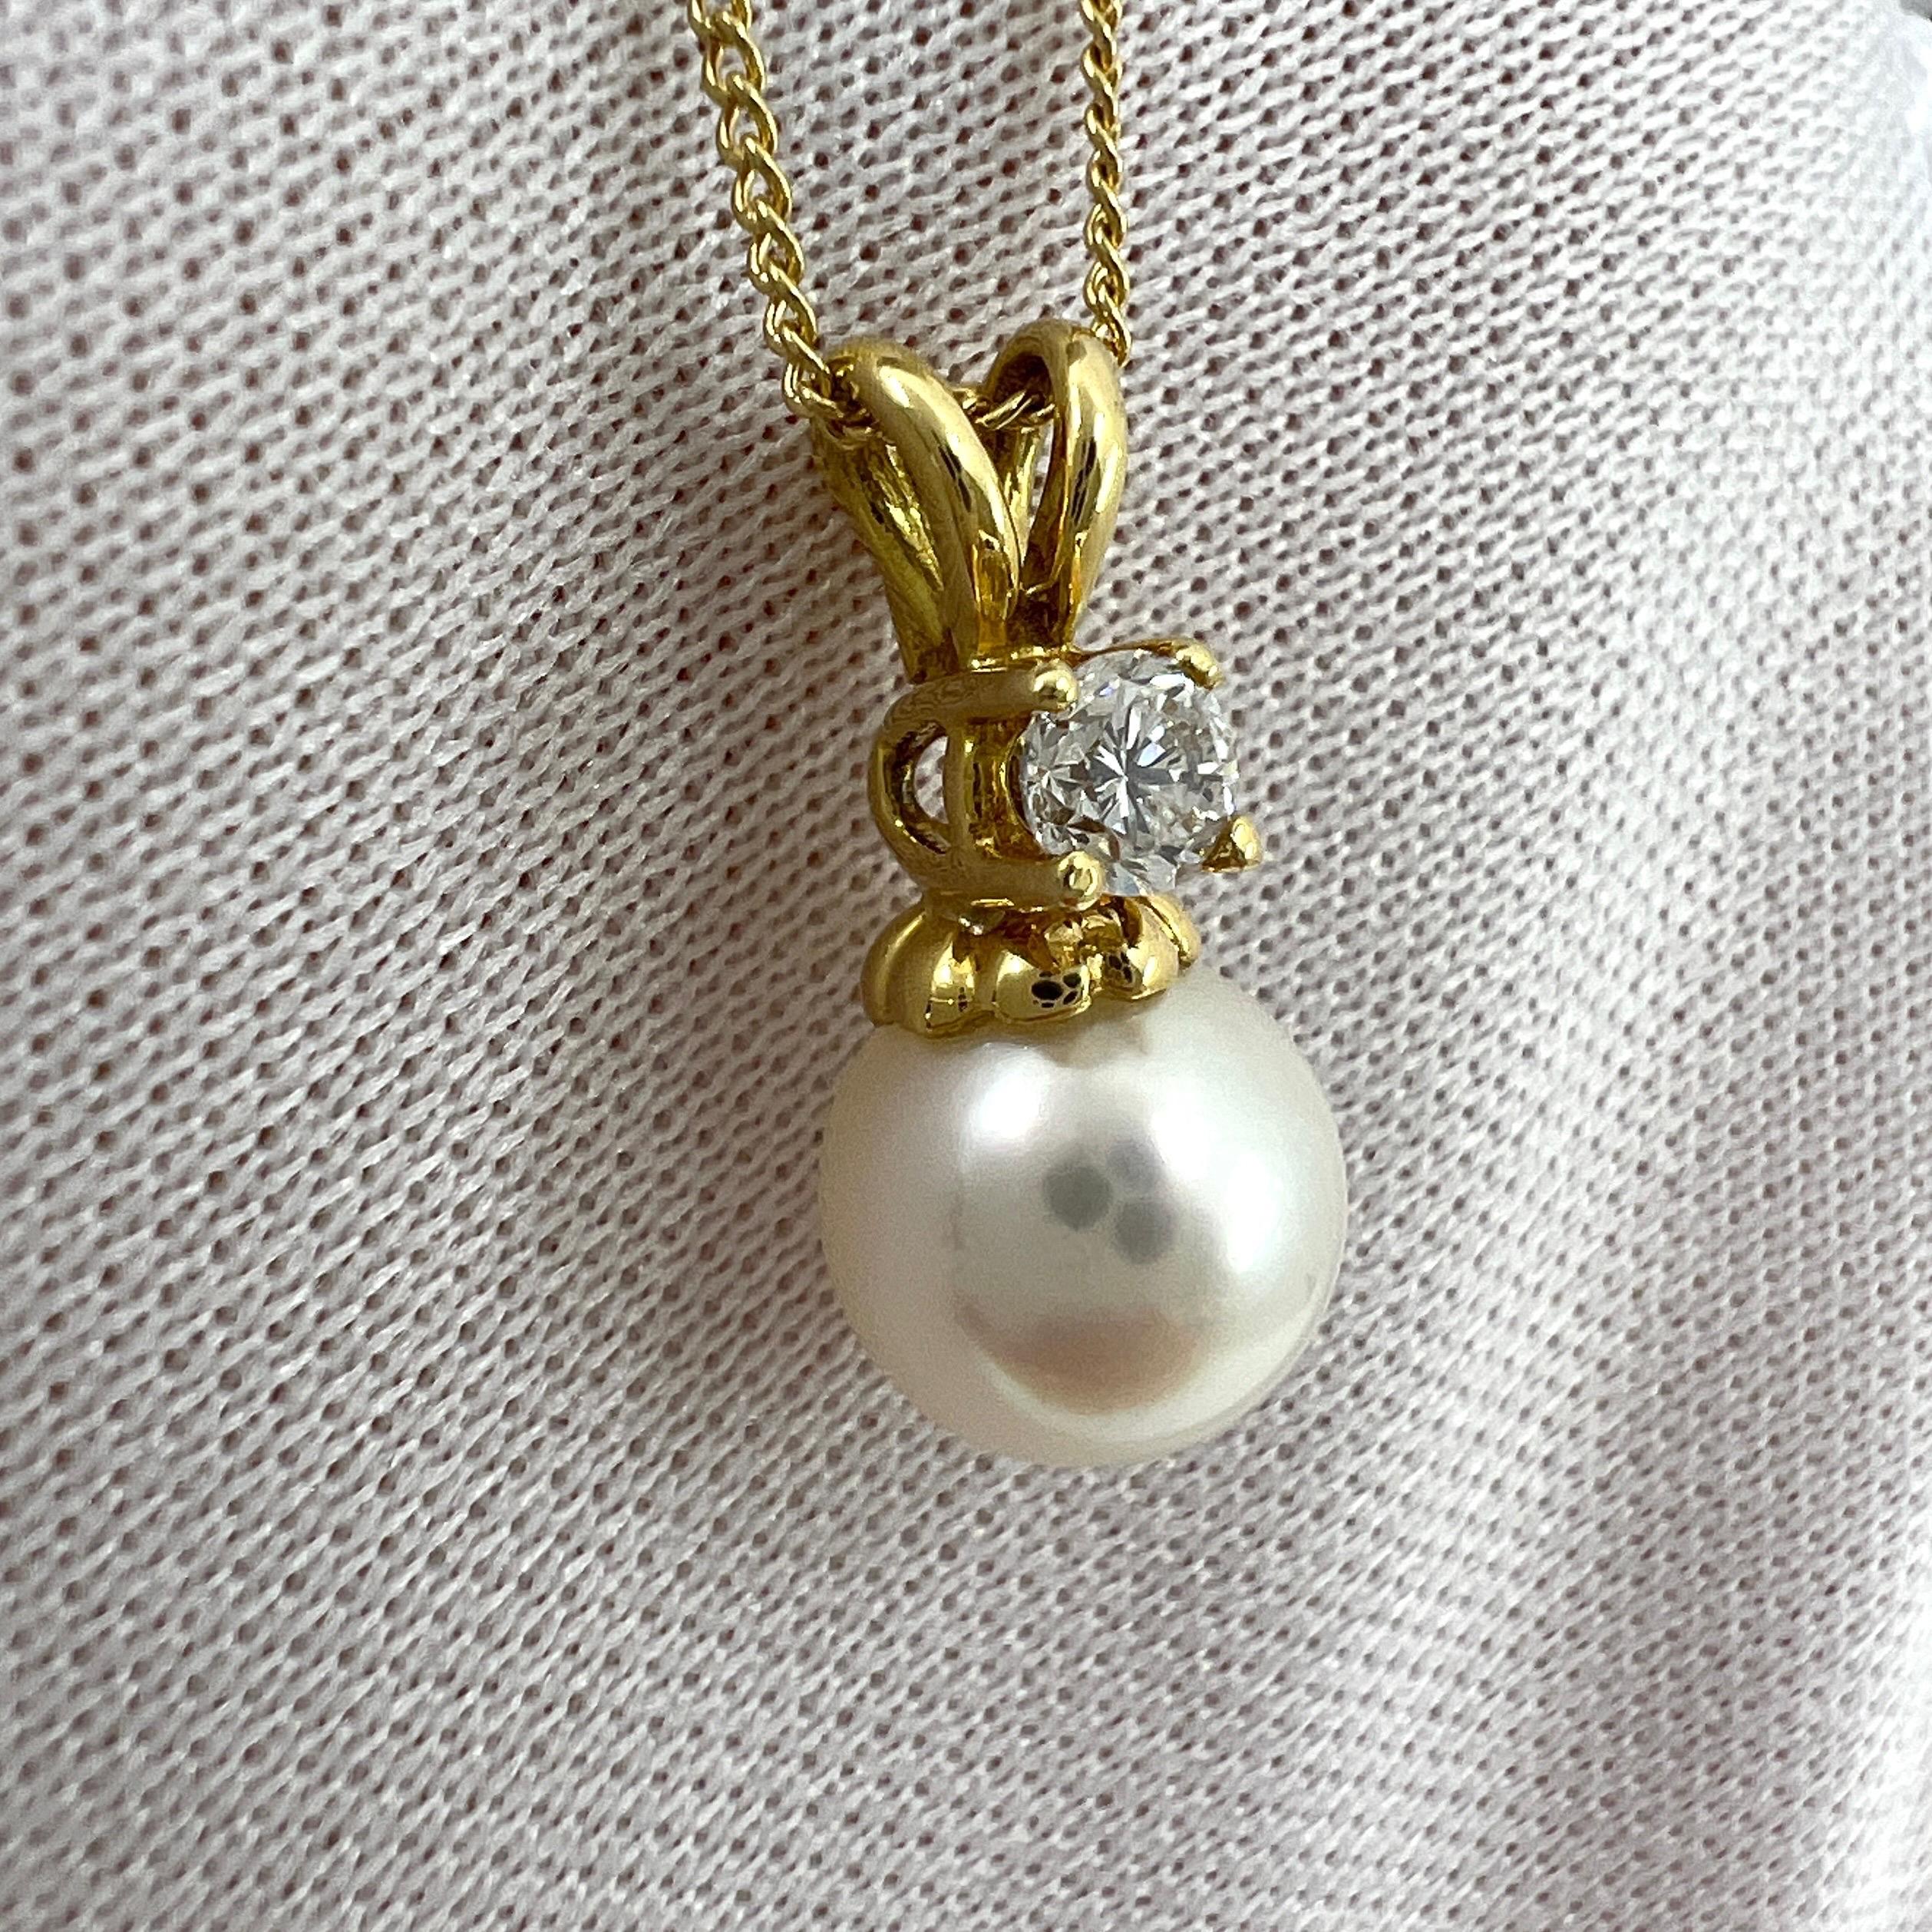 Round Cut Rare Tiffany & Co. White Pearl And Diamond 18k Yellow Gold Pendant Necklace